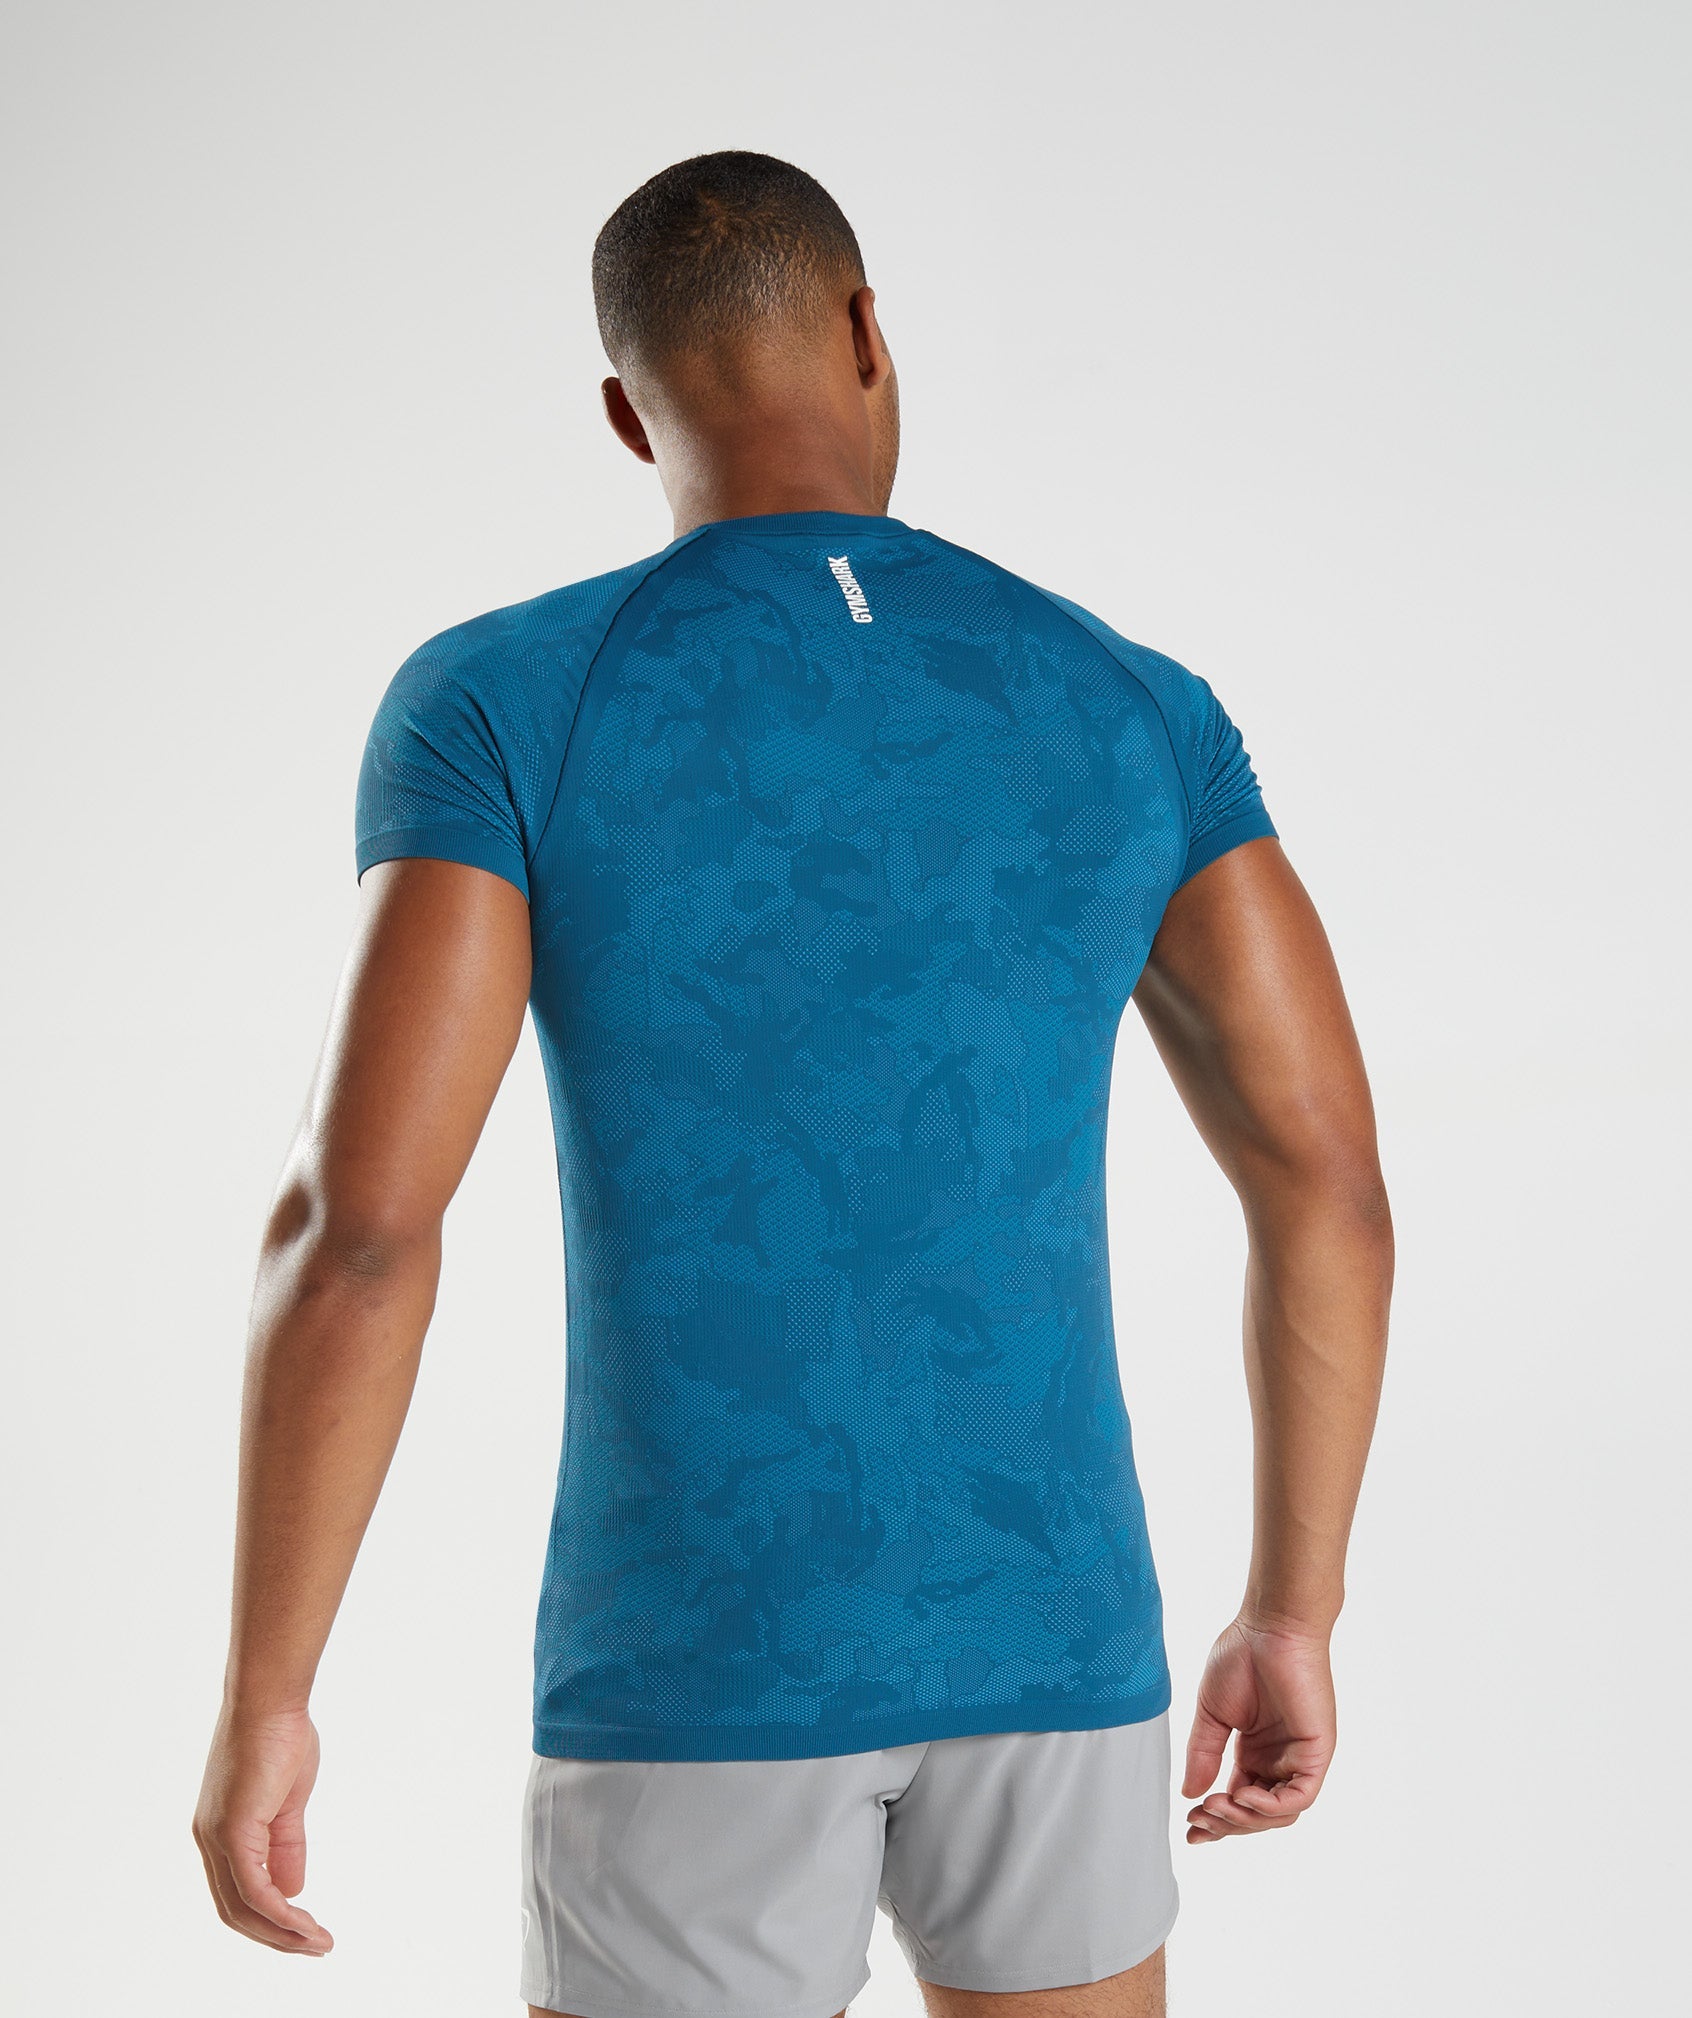 Gymshark Apollo T-Shirt - Atlantic Blue